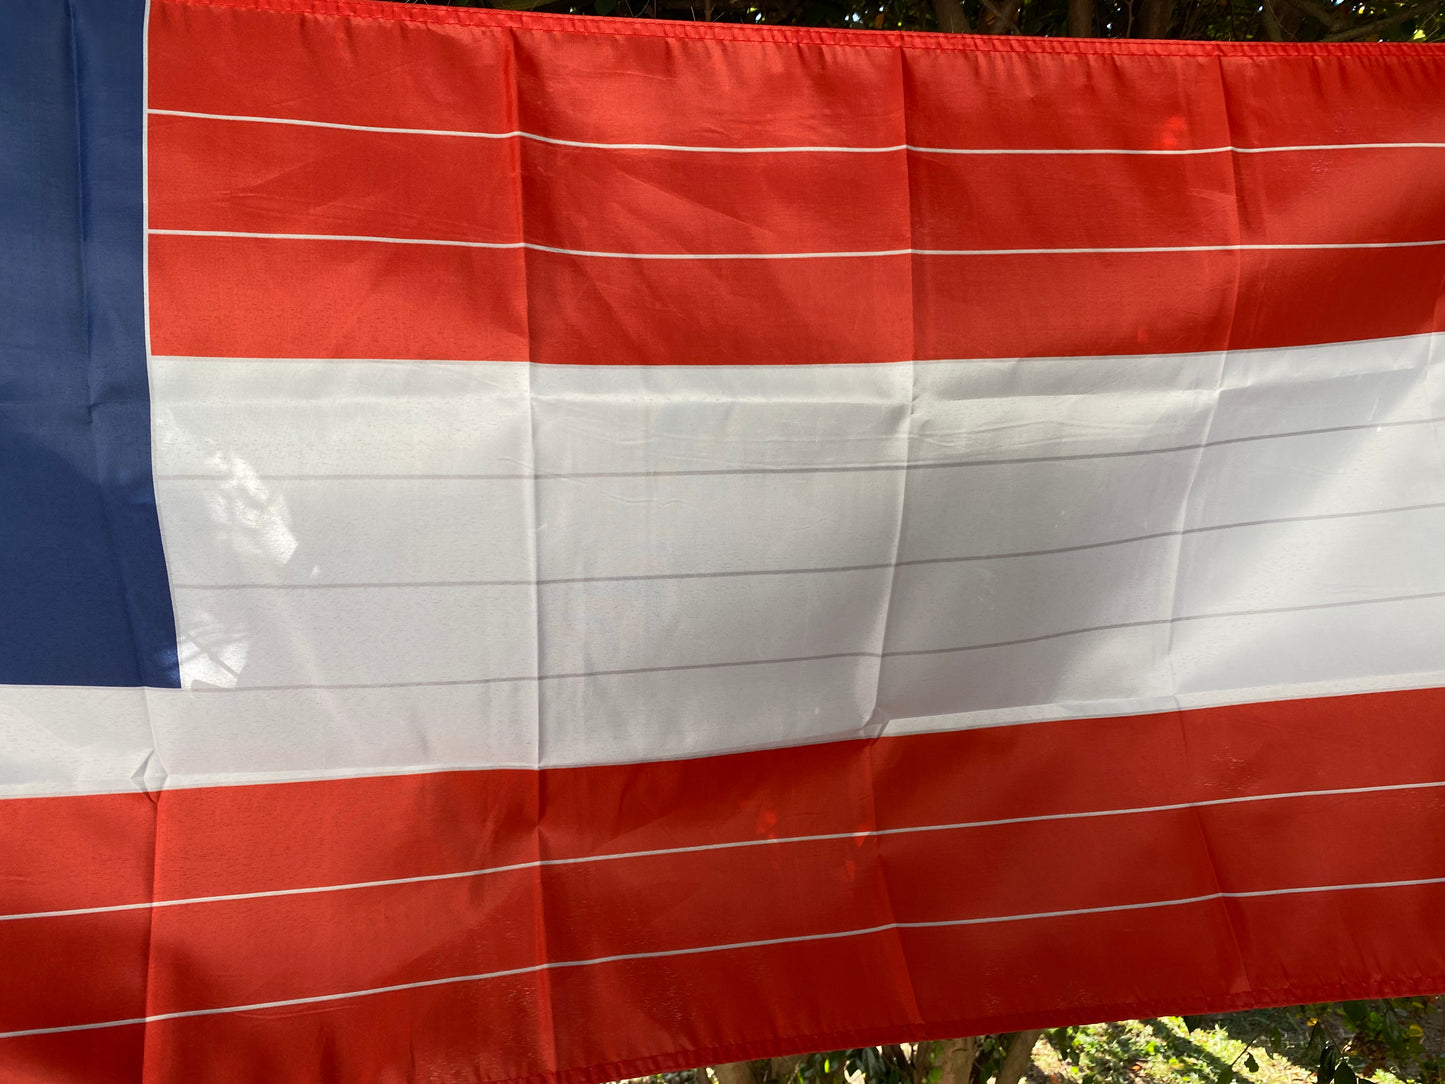 "Rebuilt United States Flag" Charleston Washington Artillery 1st National House Flag